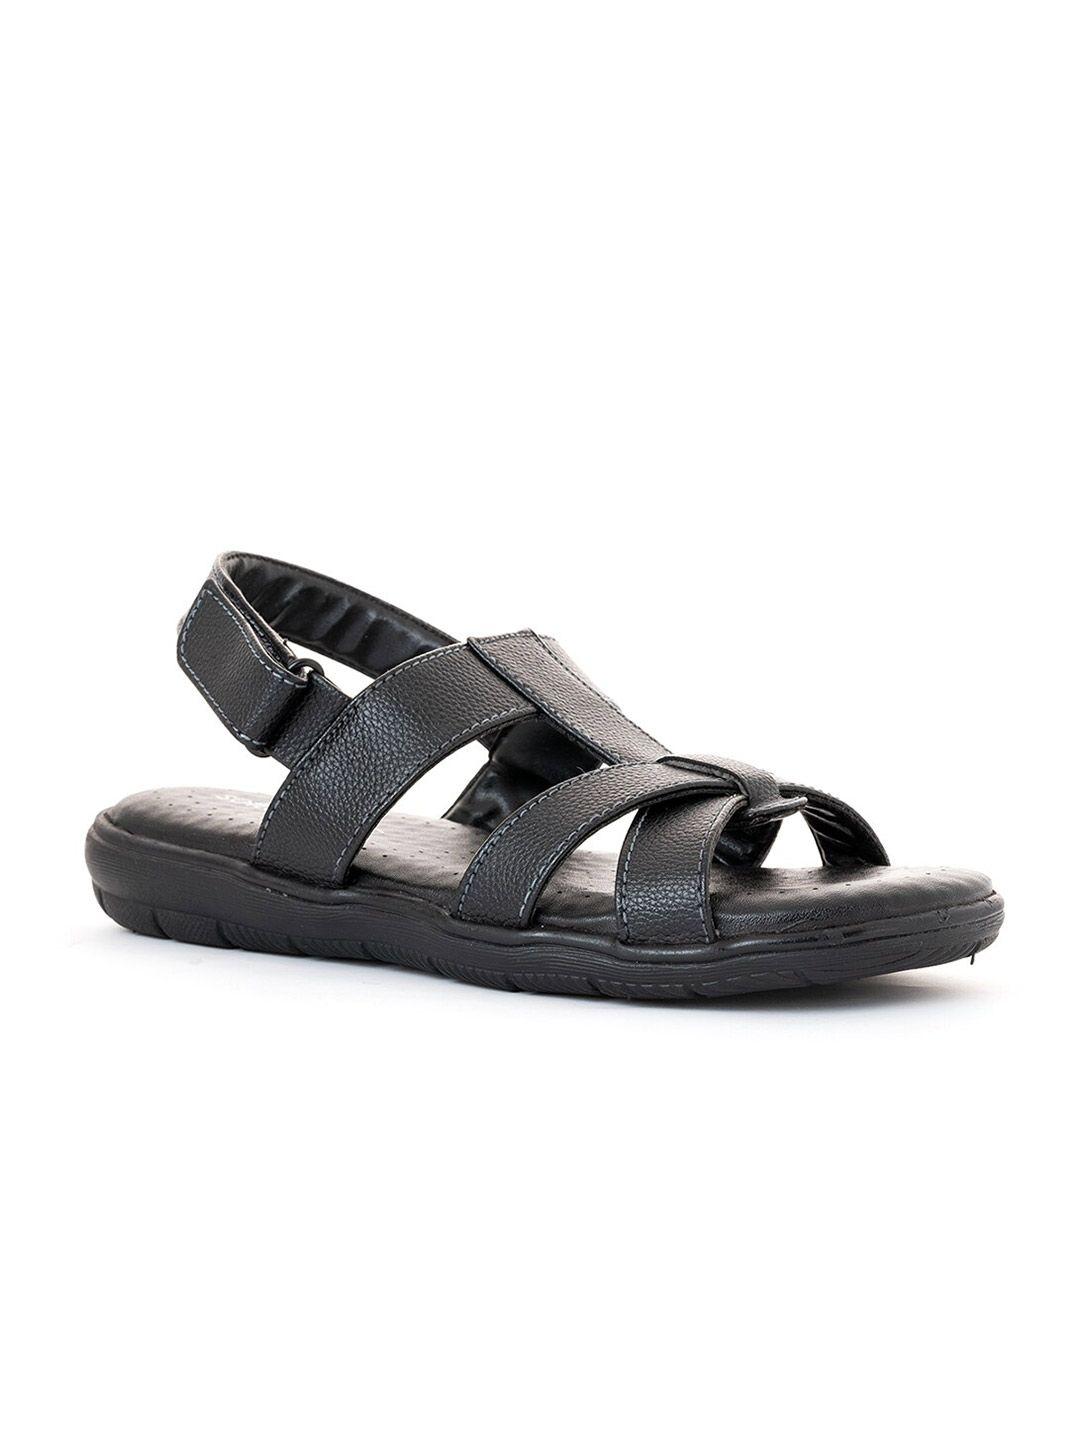 khadims men black comfort sandals